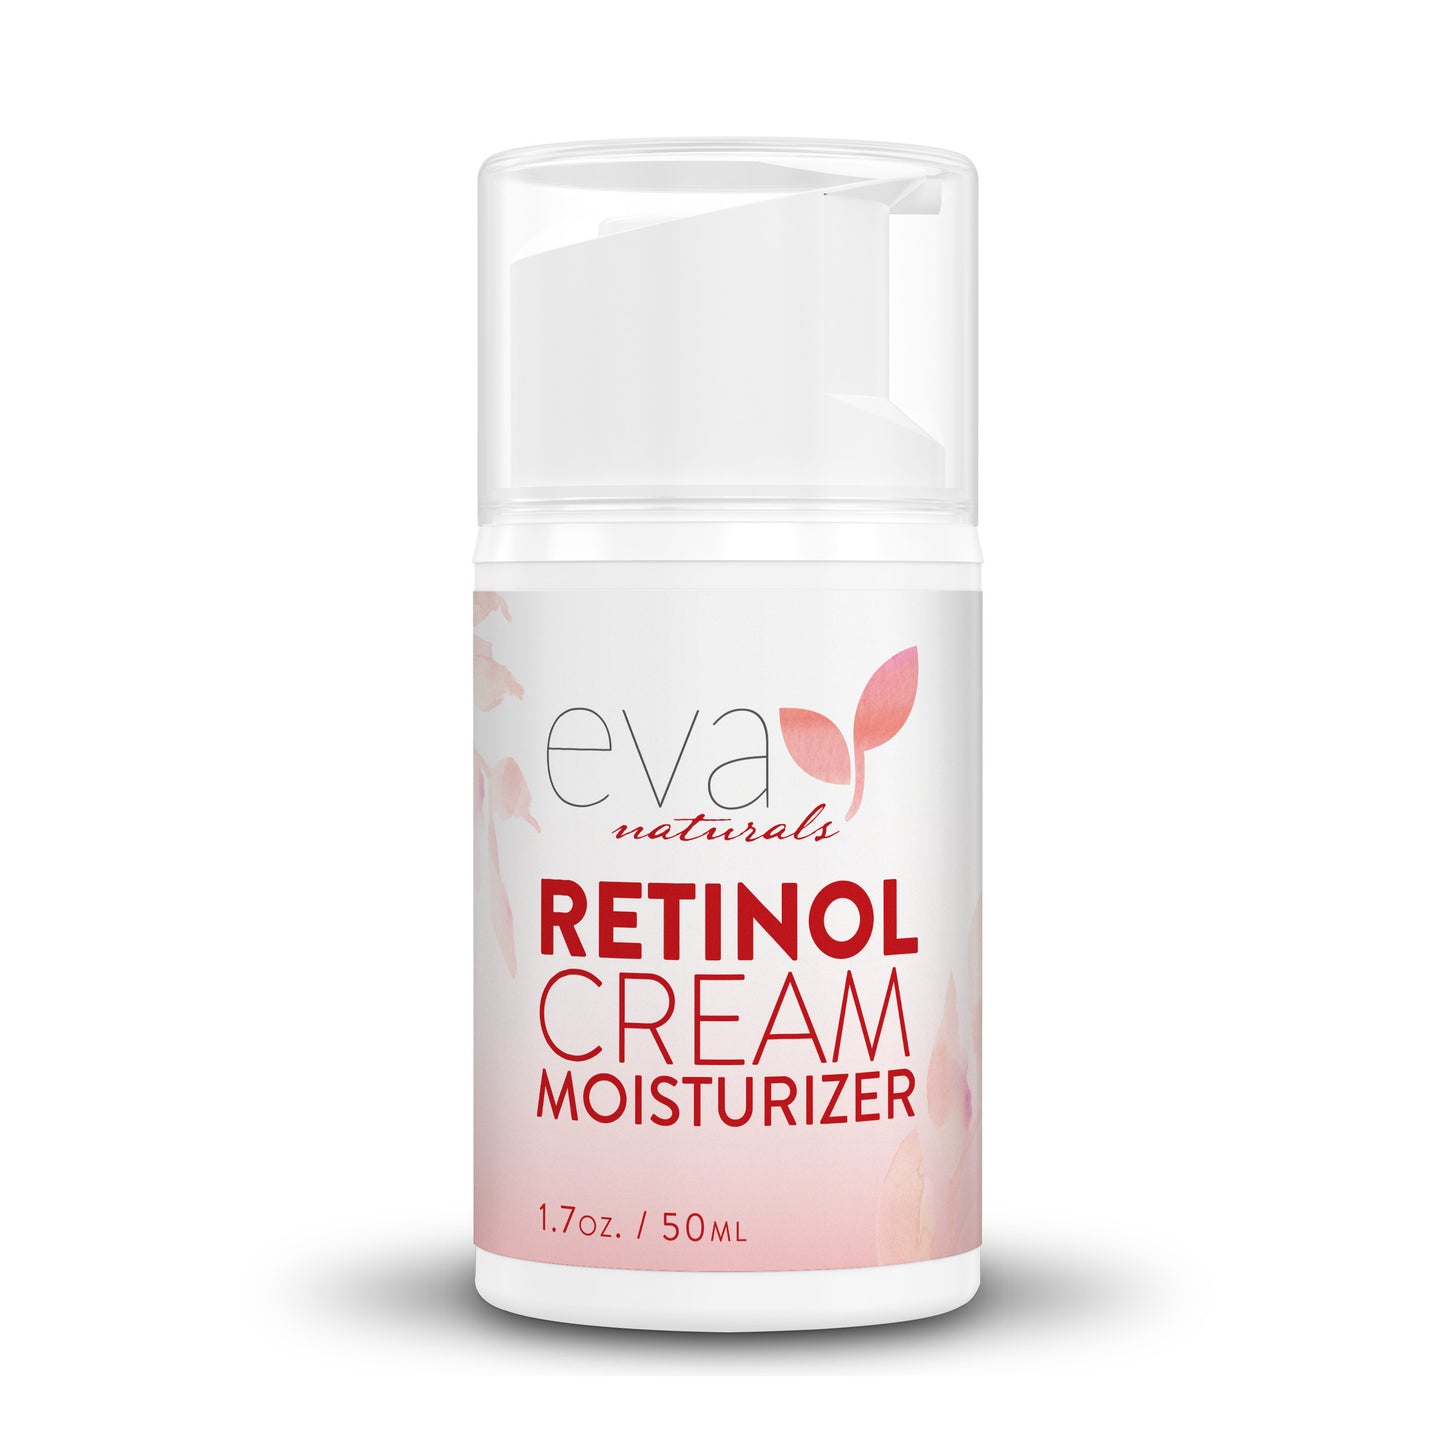 Retinol Cream Moisturizer - 1.7 oz